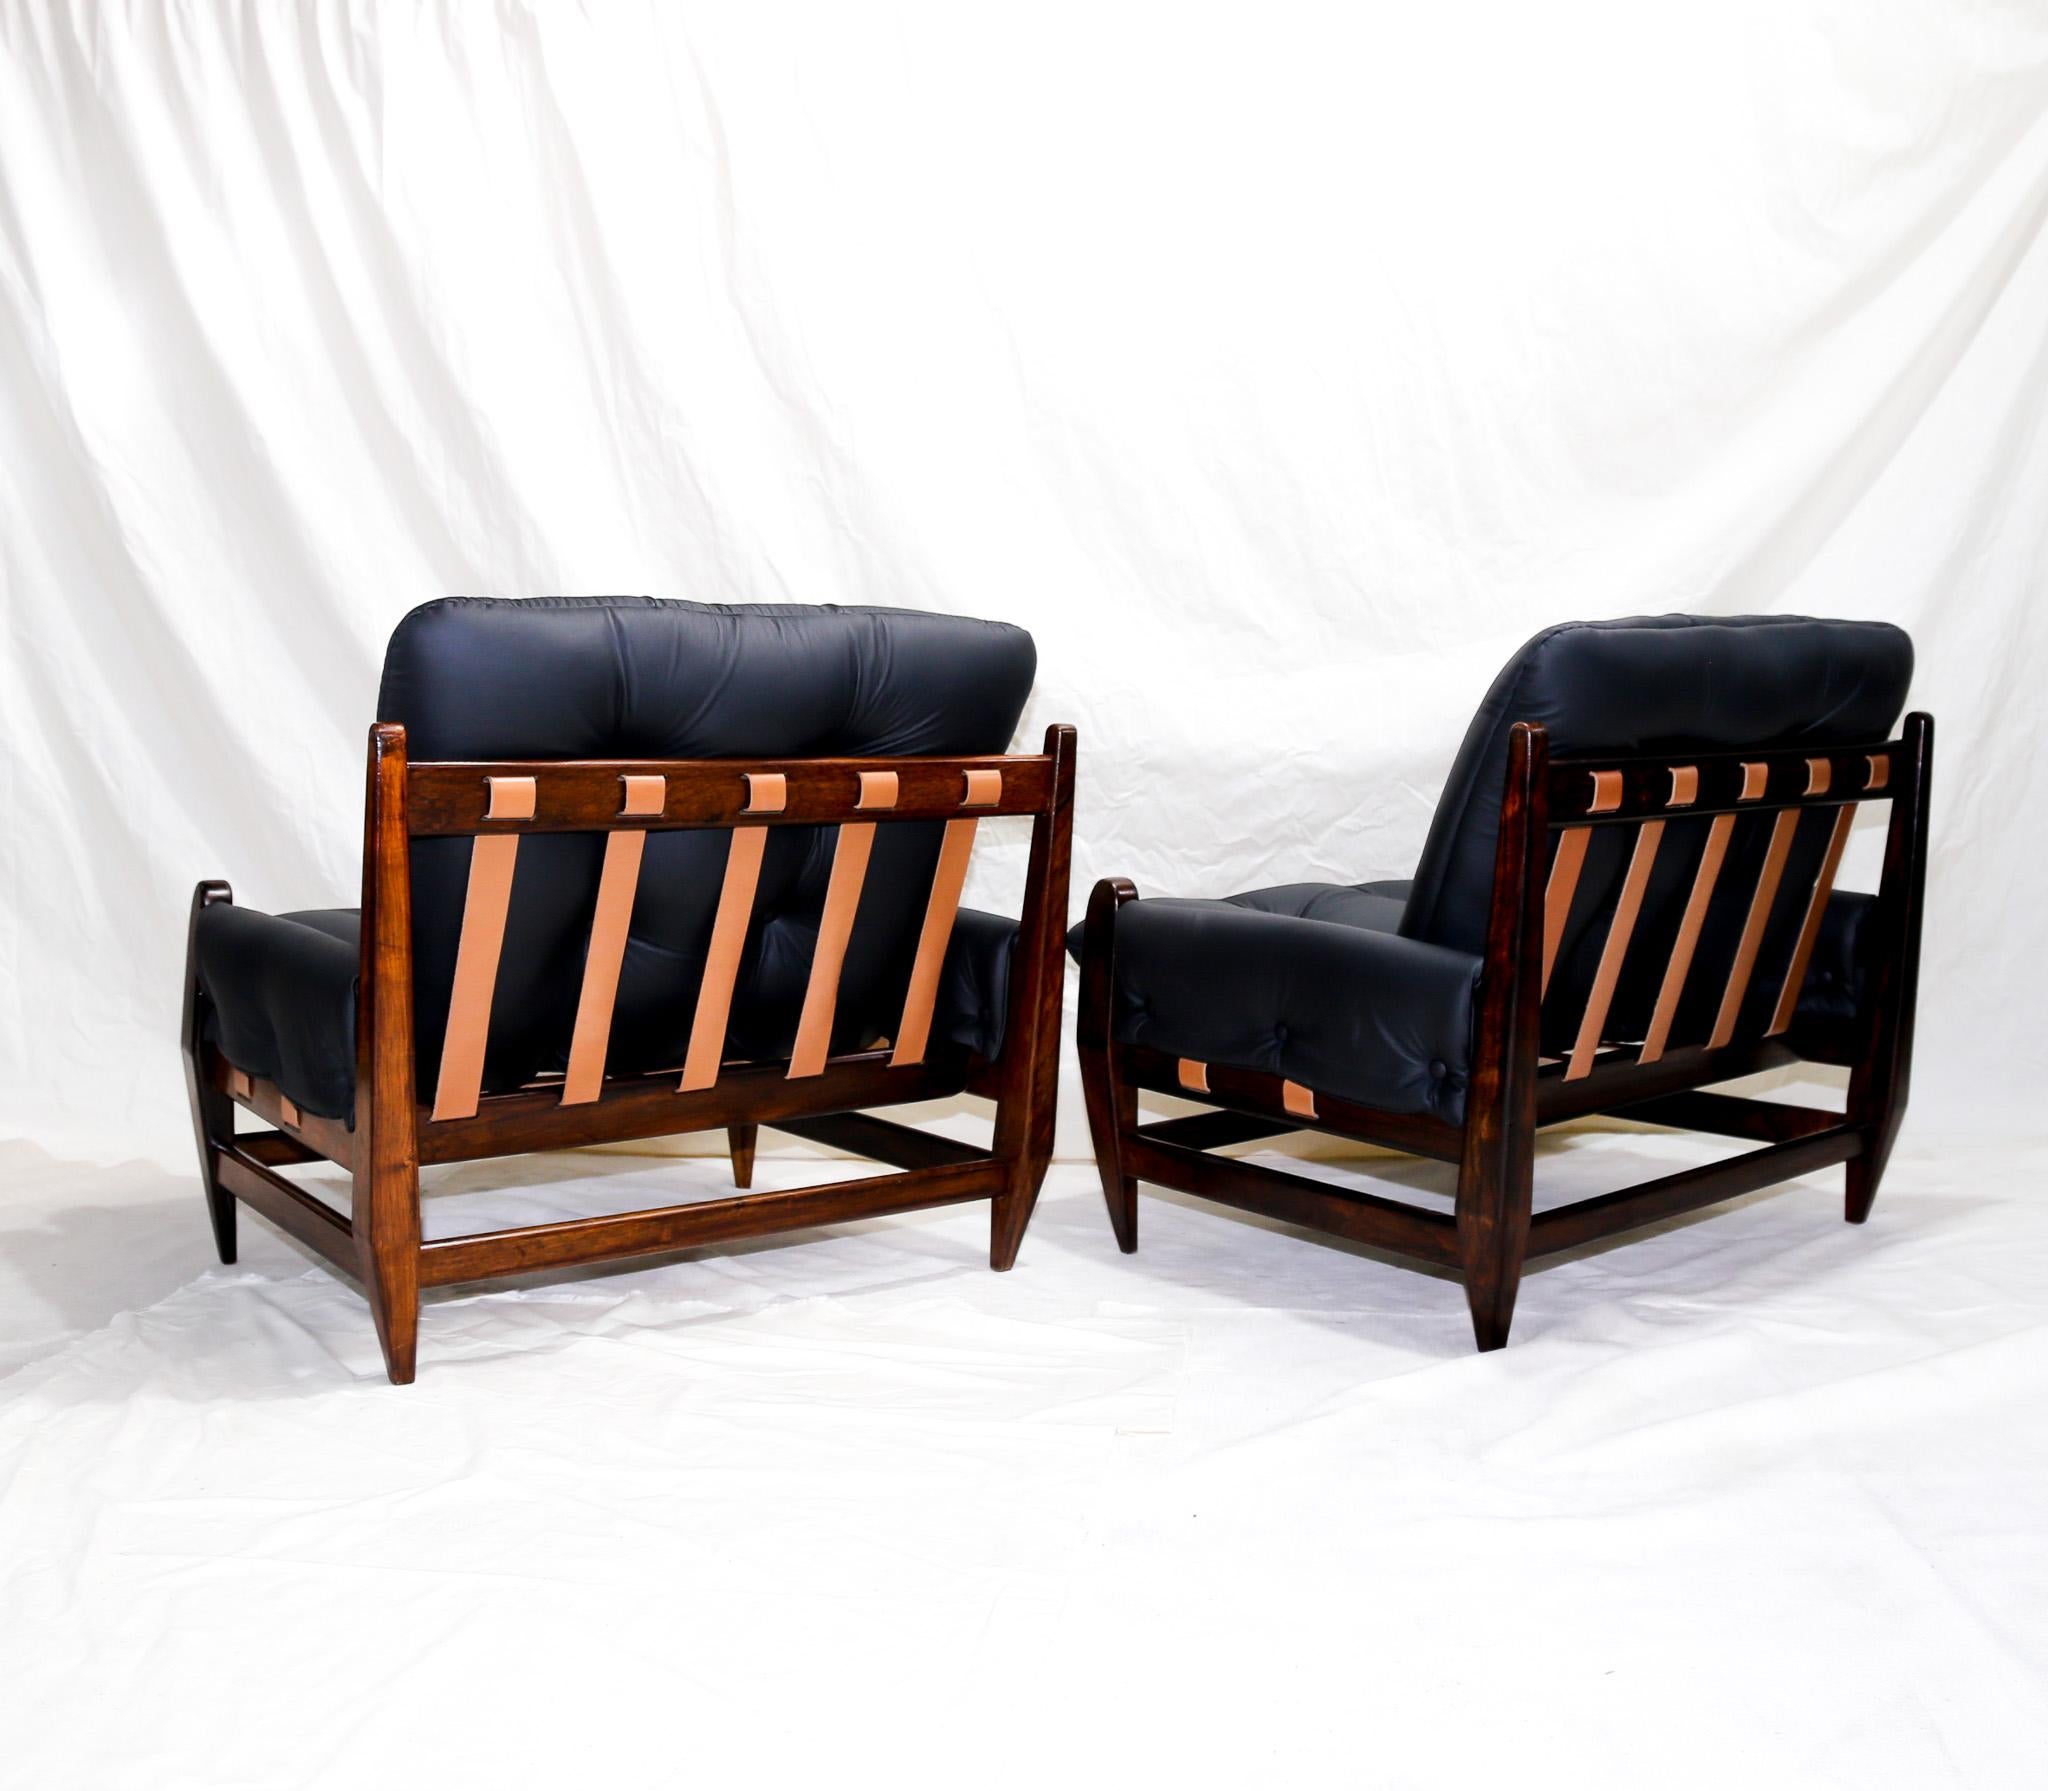 Brazilian Modern Armchairs in Hardwood & Black Leather, Jean Gillon, 1960 For Sale 6